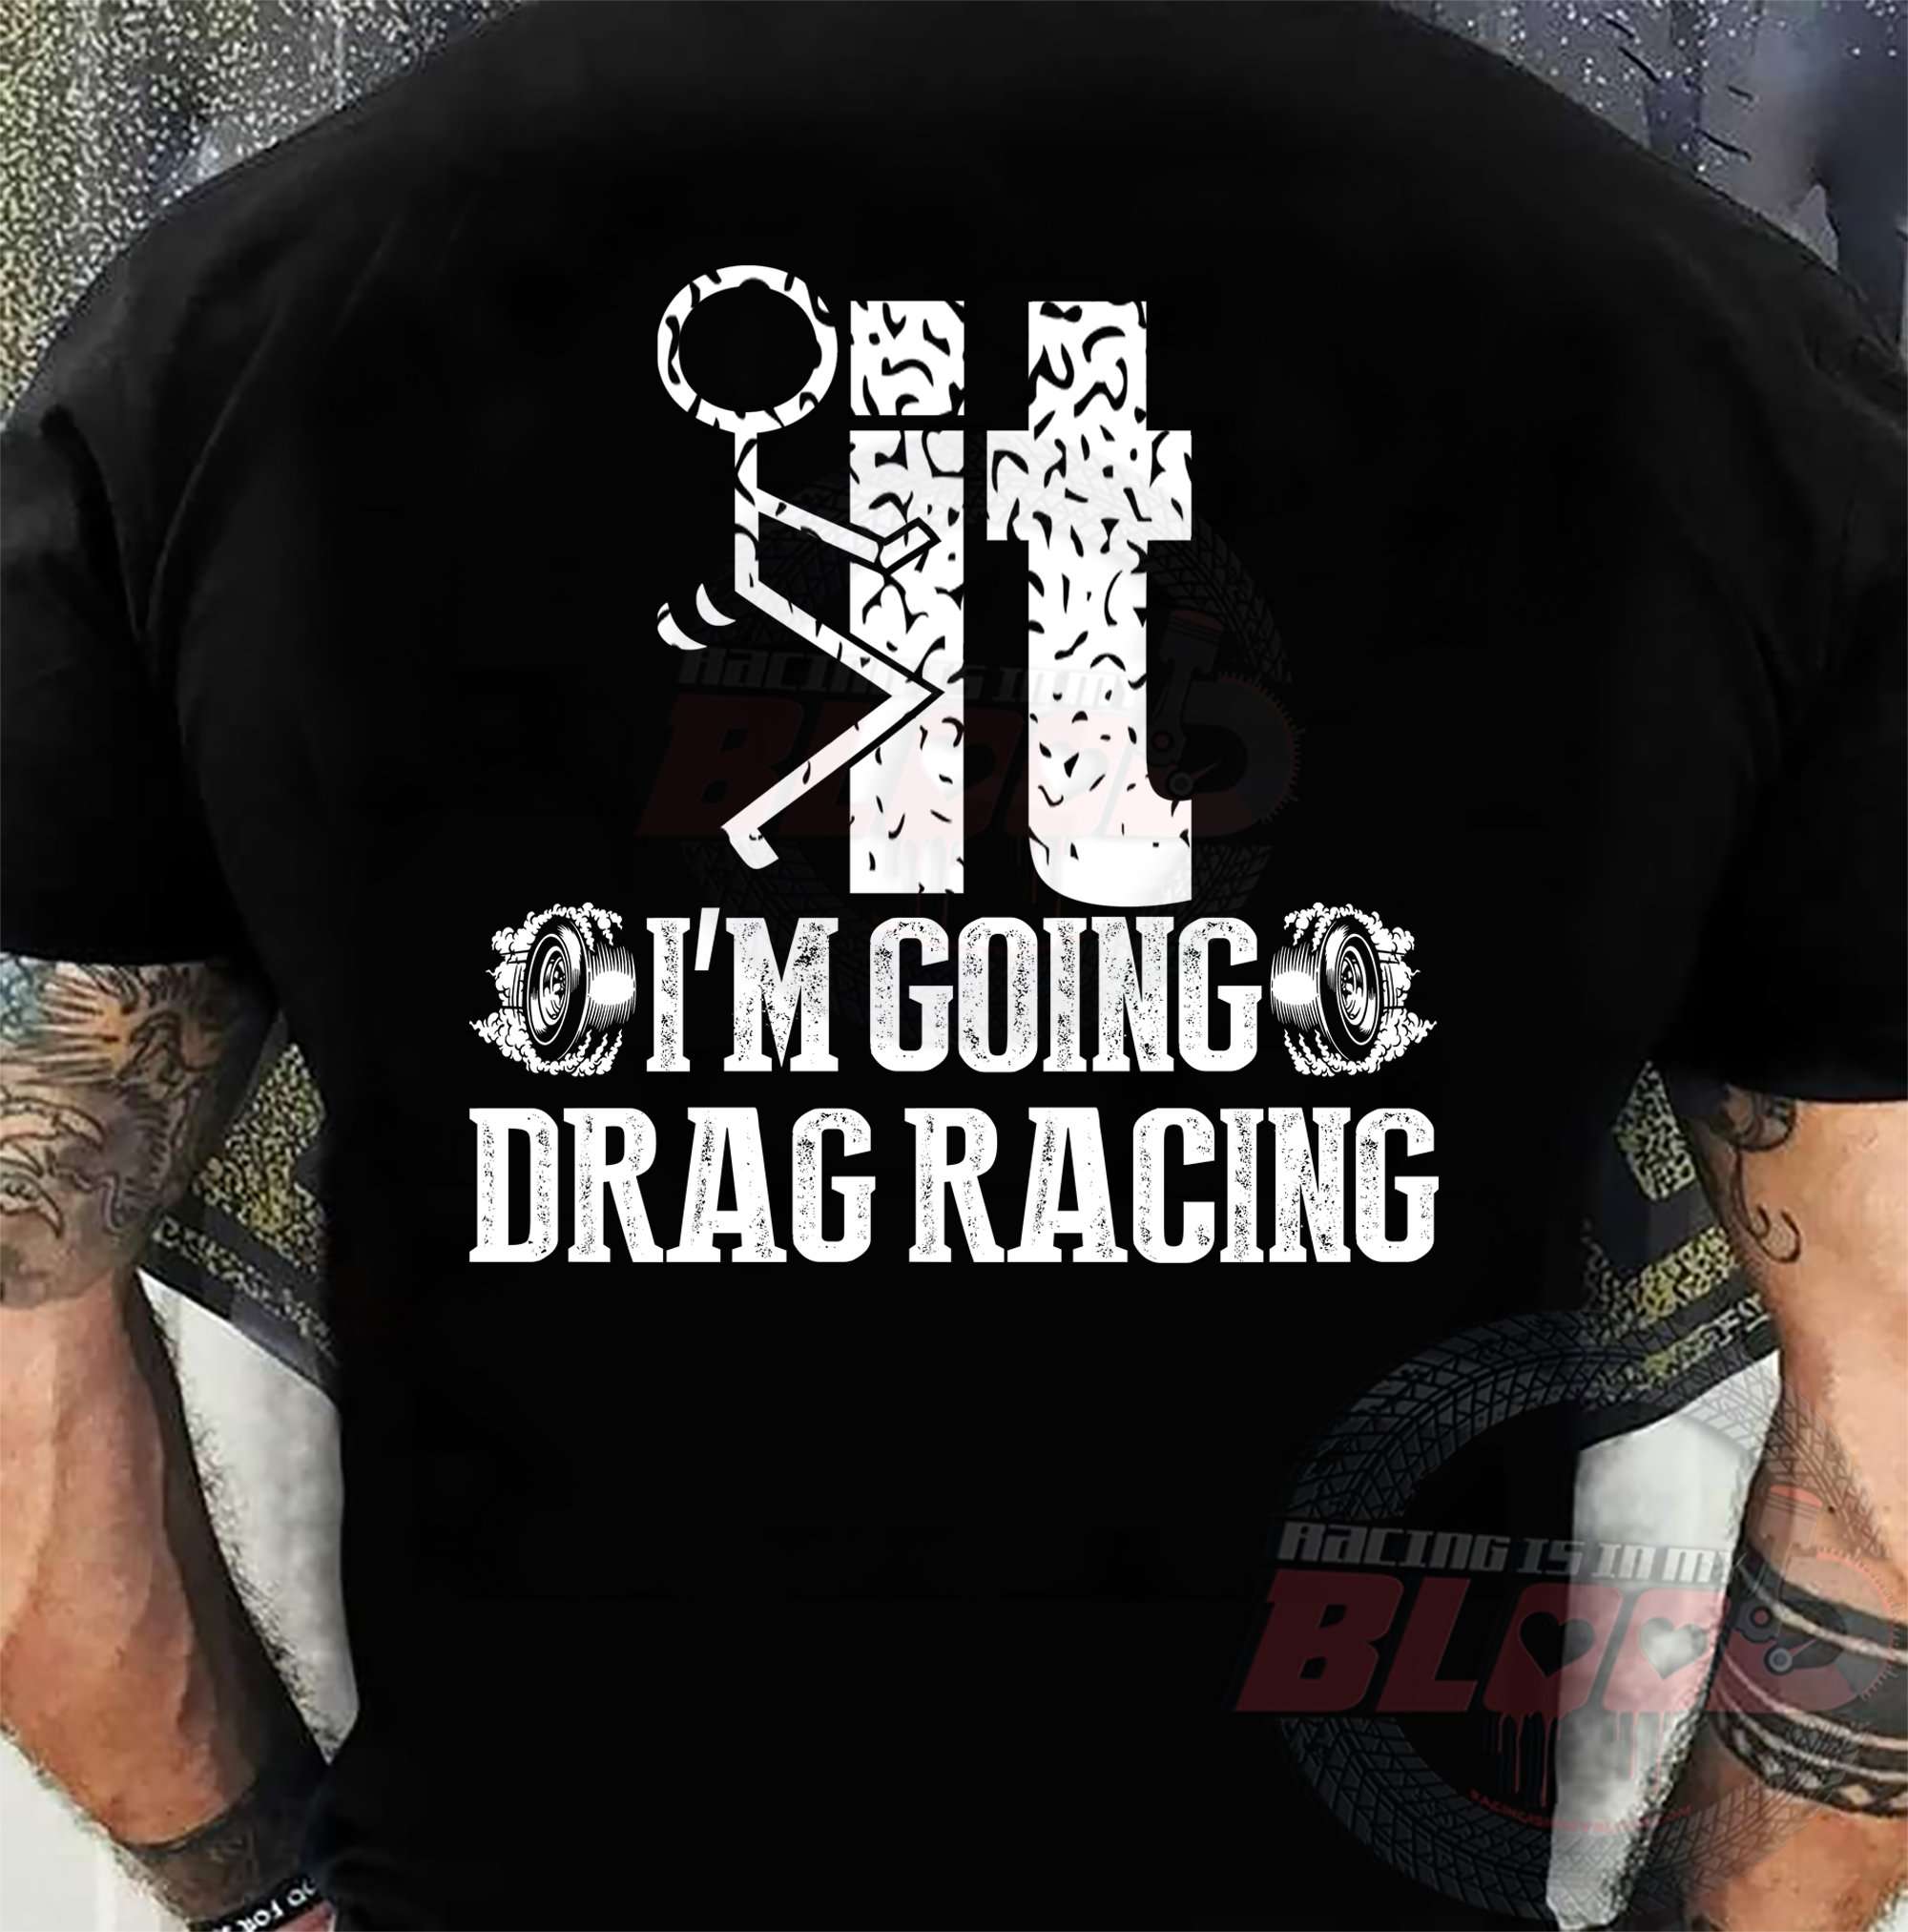 I'm going drag racing - Drag racing stick people, drag racing lover T-shirt